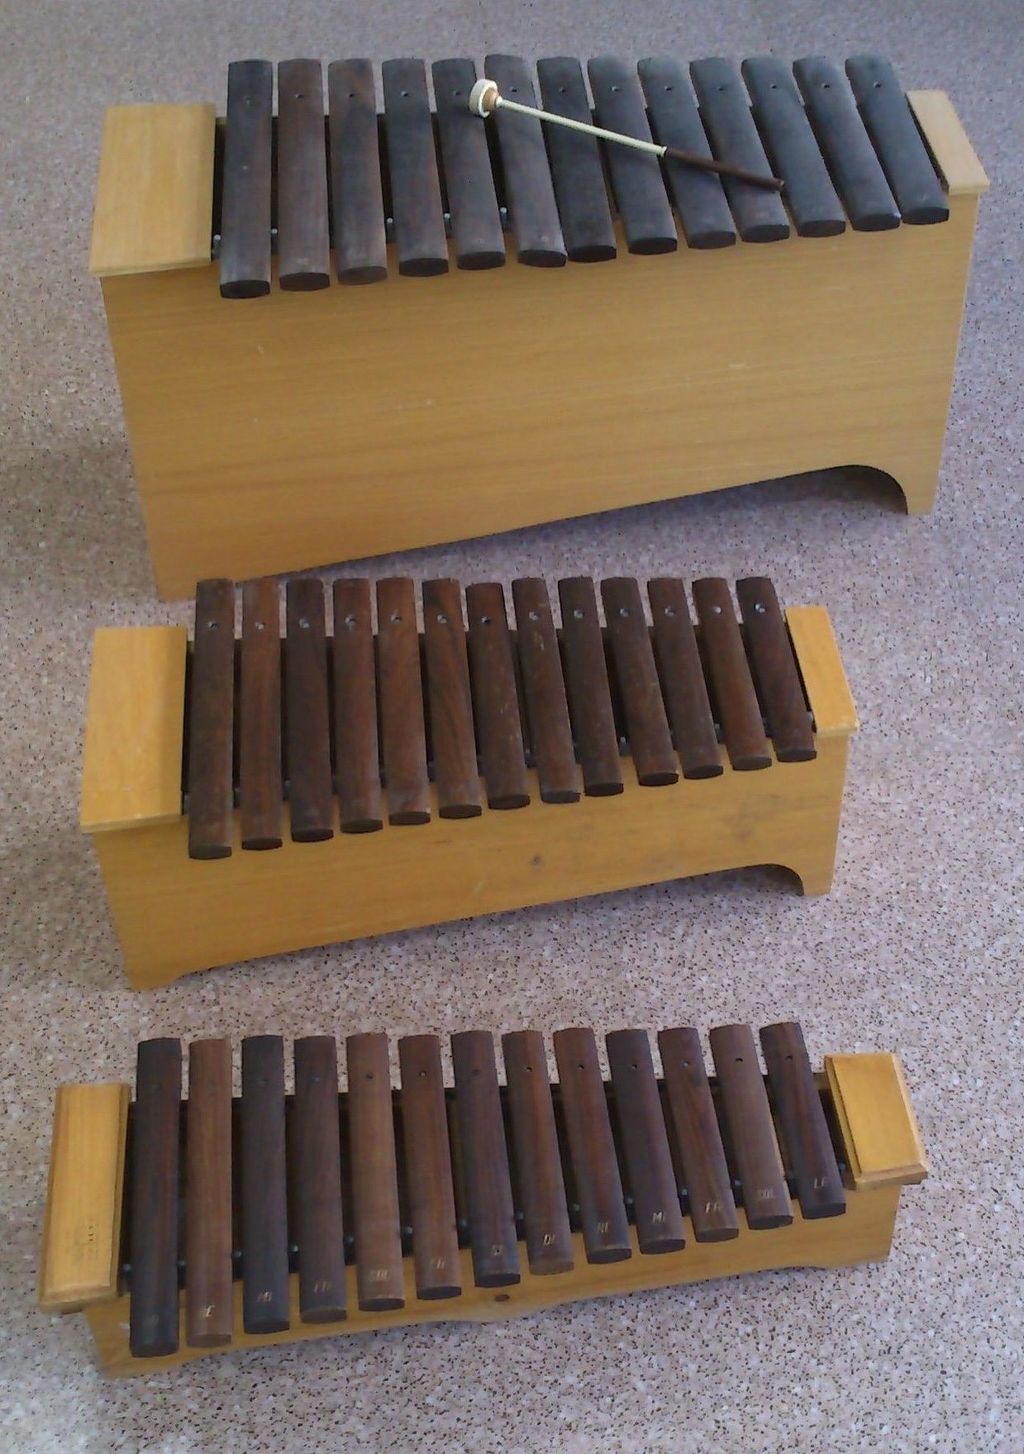 3 sizes of xylophone